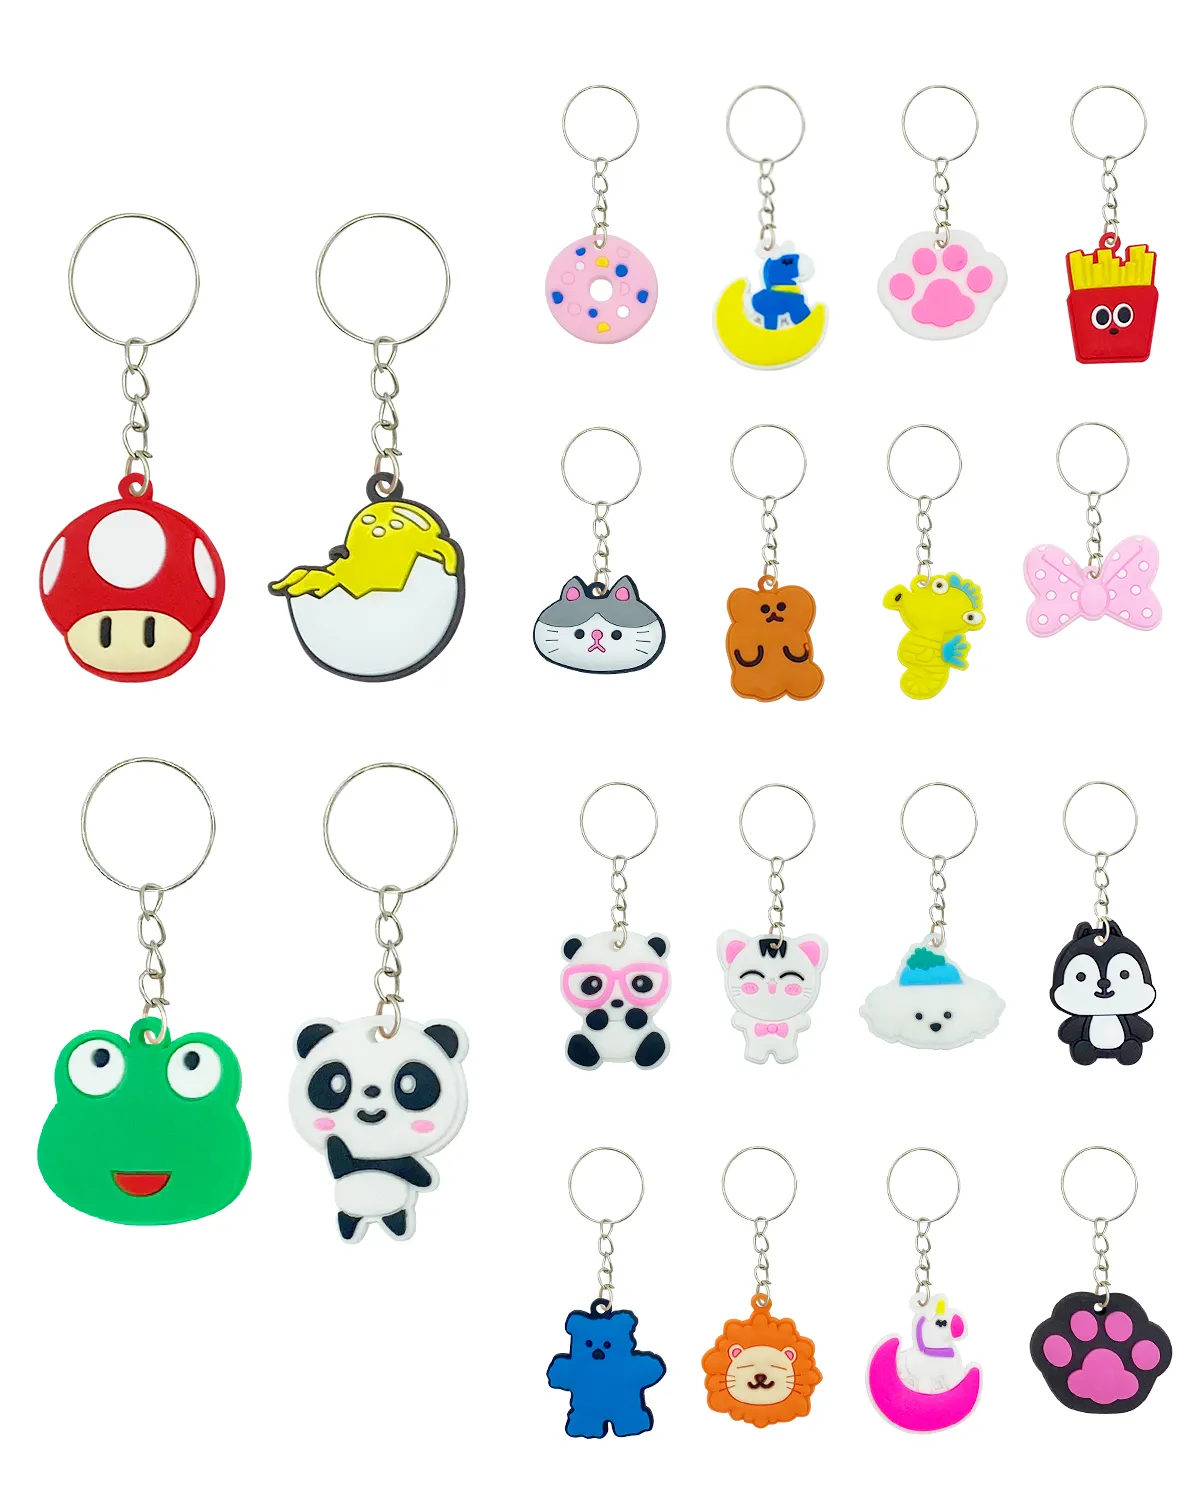 100 PCS Anime Keychain cartoon Cute Keyrings Party Favor Wholesale PVC Pendants Charms Sets School rewards Party Supplier Key Ring Holiday Business Gift souvenir